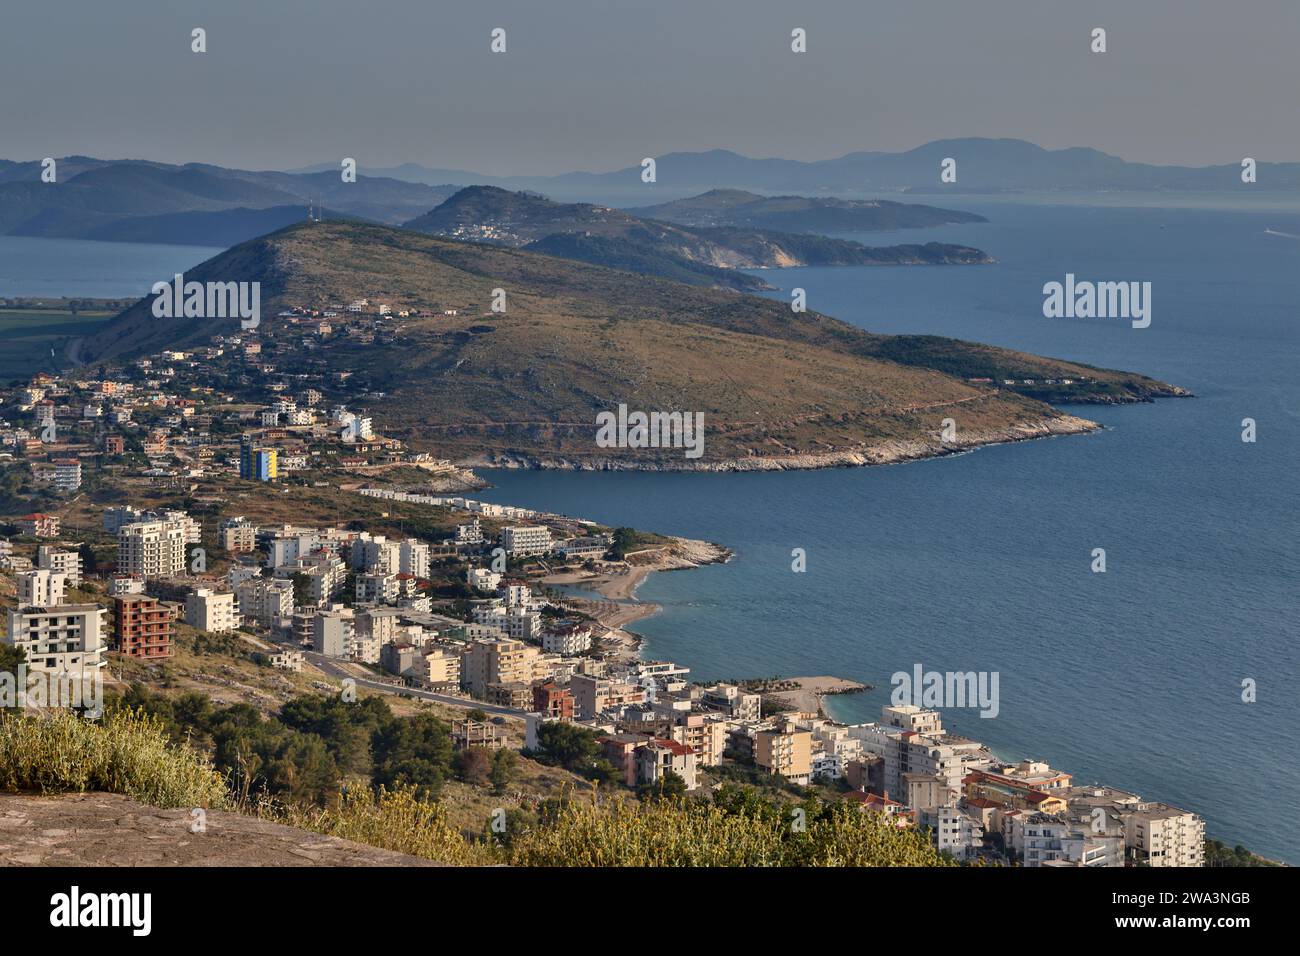 View of Qeparo, the Albanian Riviera and the Ionian Sea, Qeparo, Albania, Europe Stock Photo